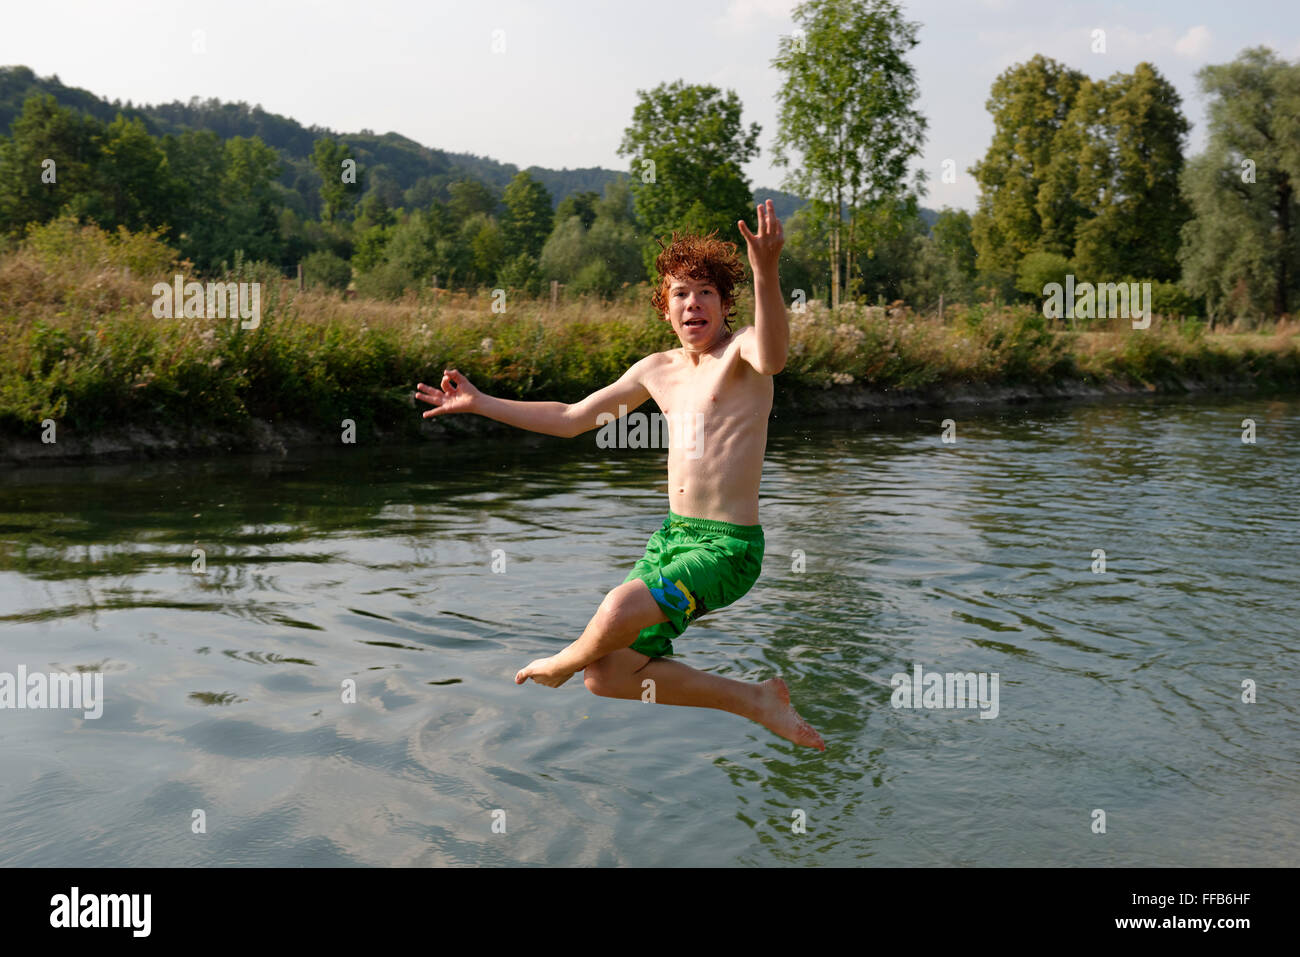 Teenage boy jumping into river, Upper Bavaria, Bavaria, Germany Stock Photo